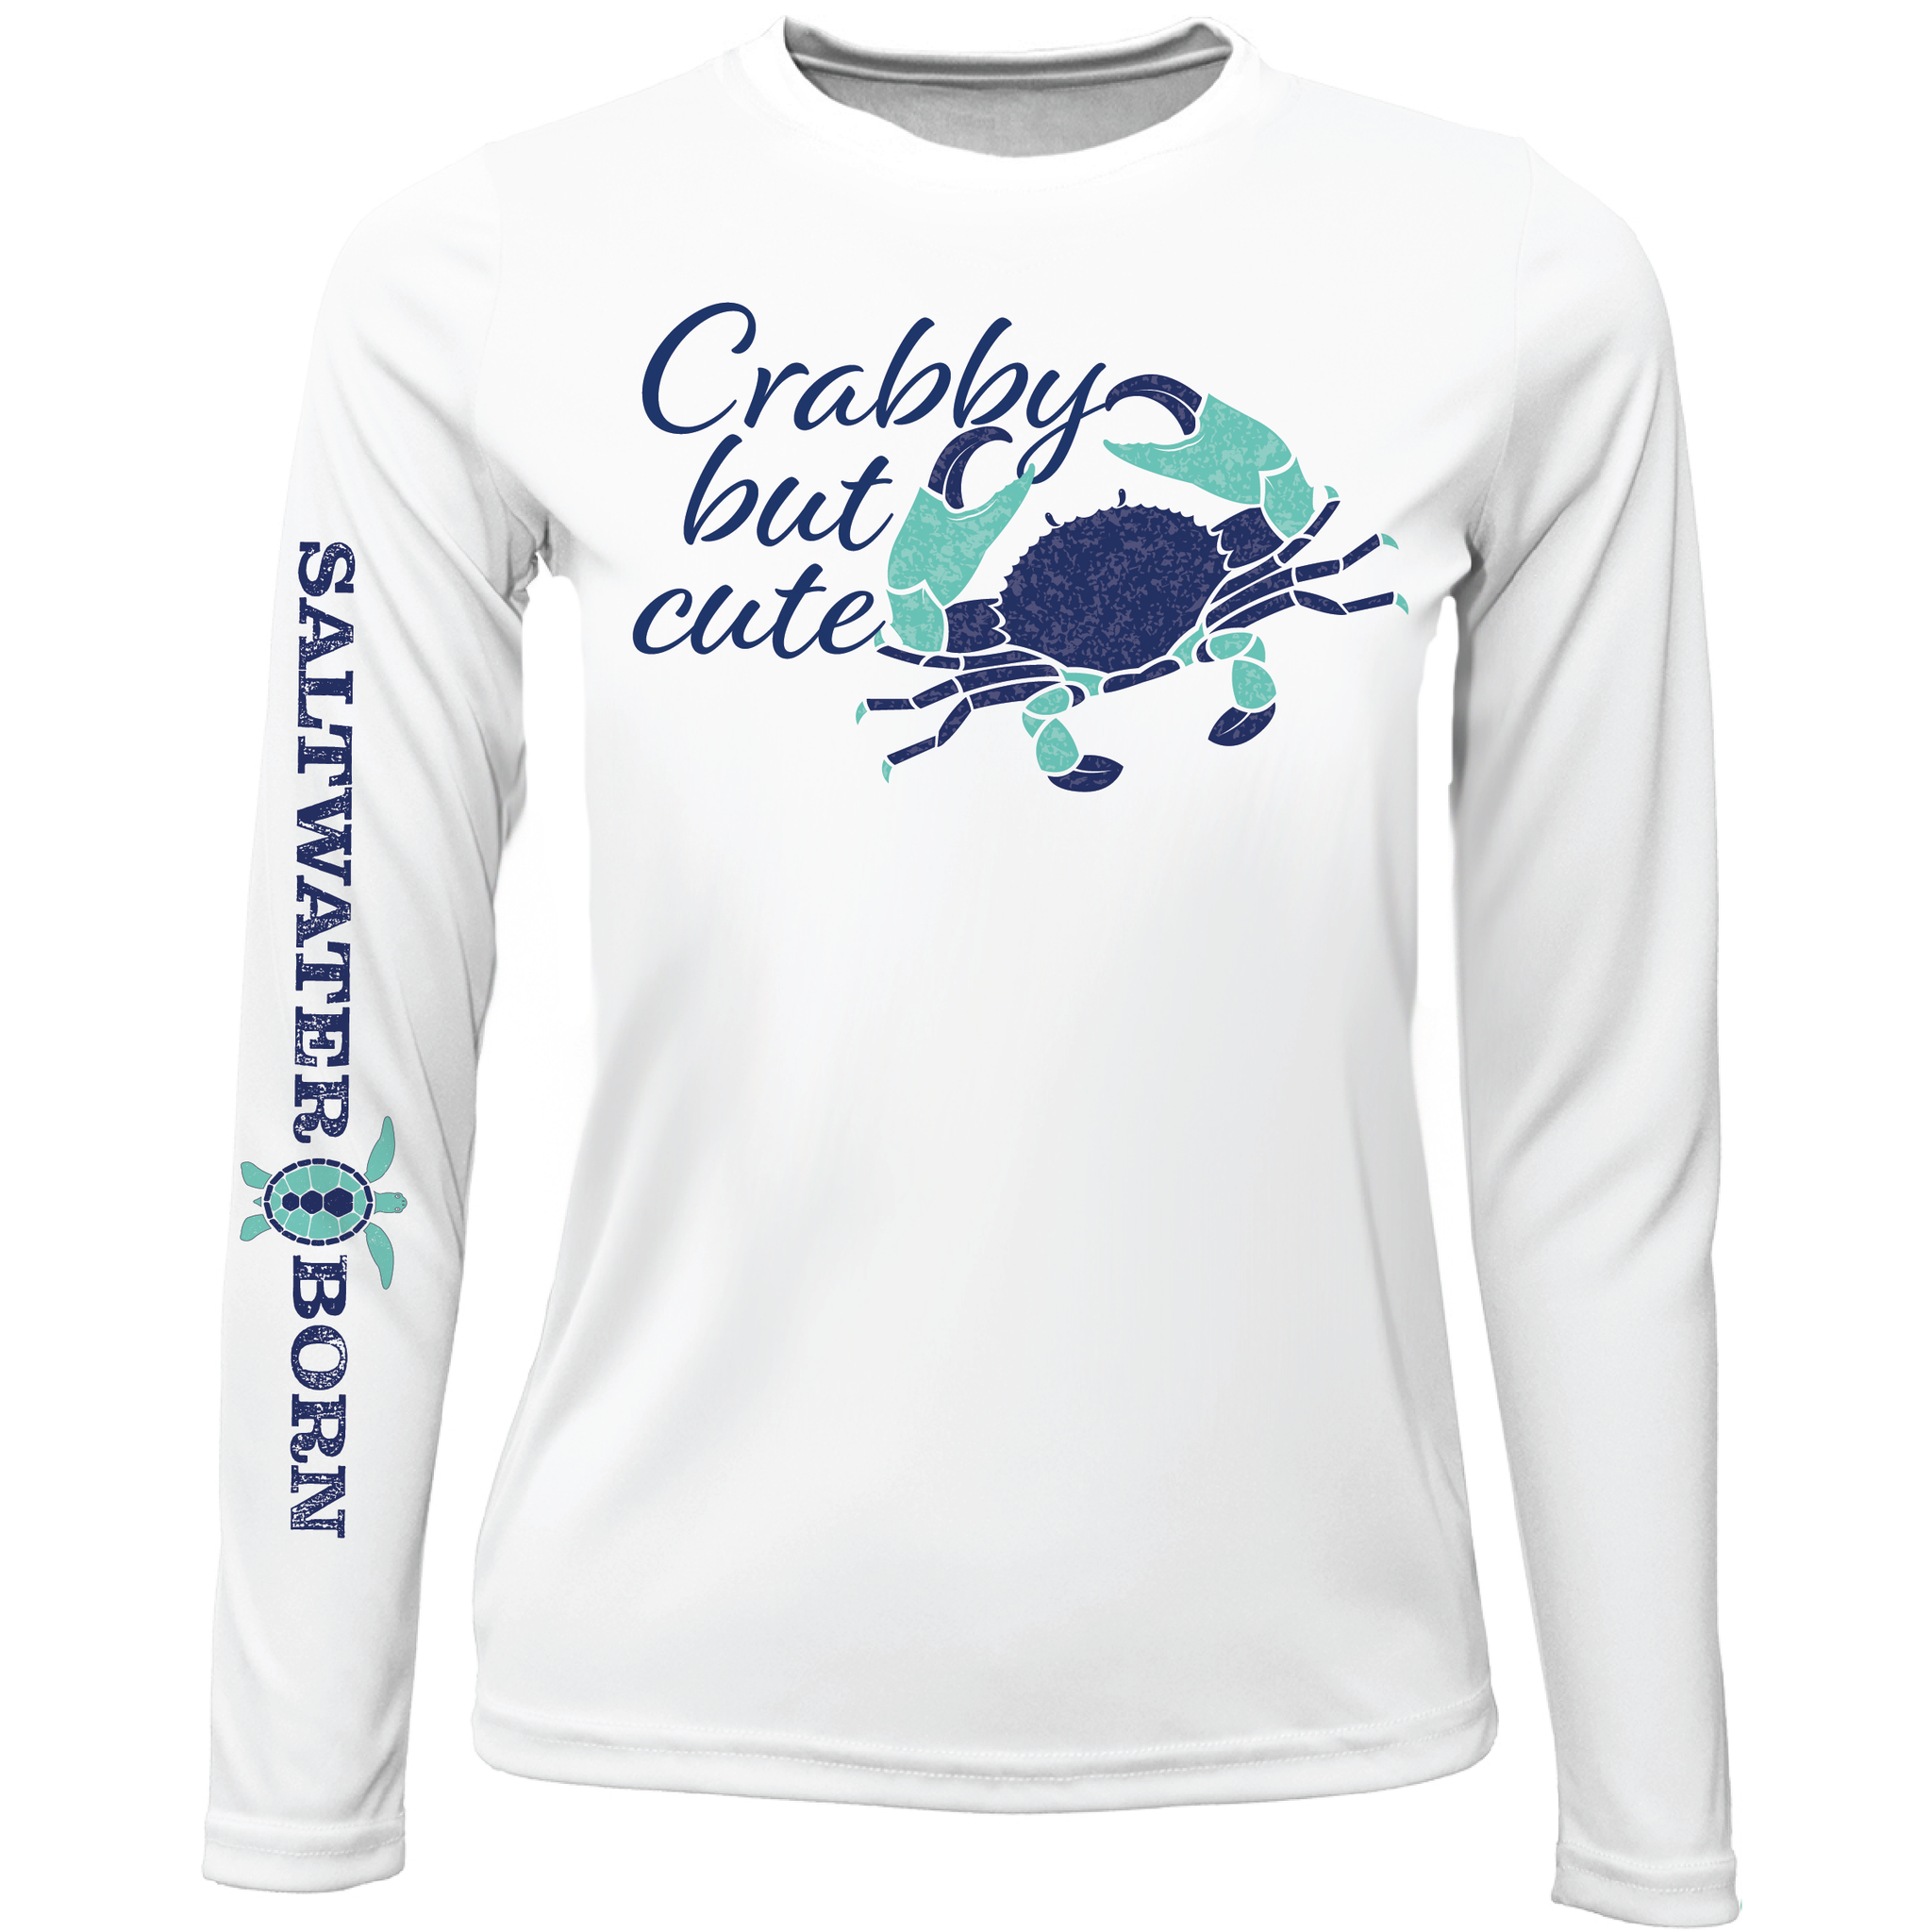 "Crabby But Cute" Girls Long Sleeve UPF 50+ Dry-Fit Shirt